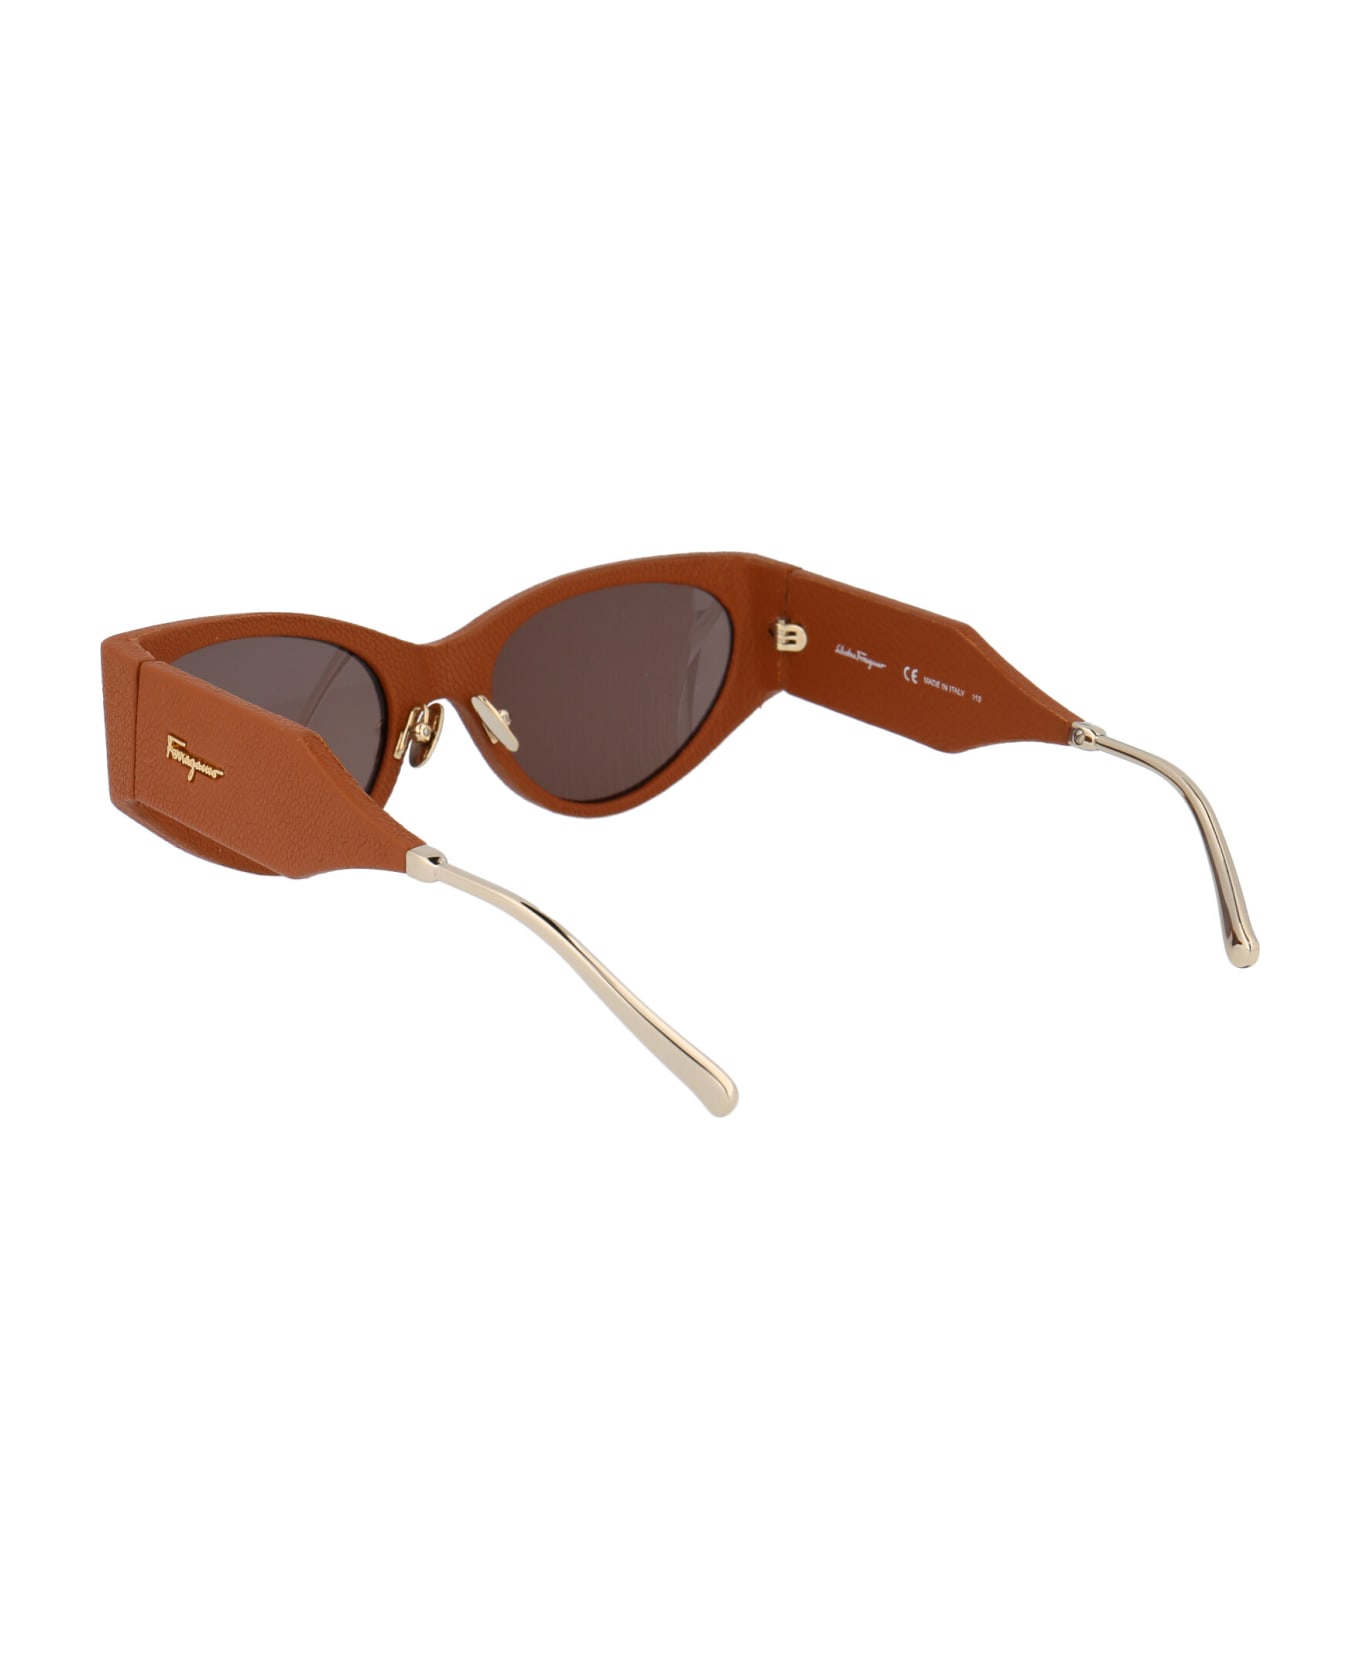 Salvatore Ferragamo Eyewear Sf950sl Sunglasses - 261 CARAMEL LEATHER サングラス